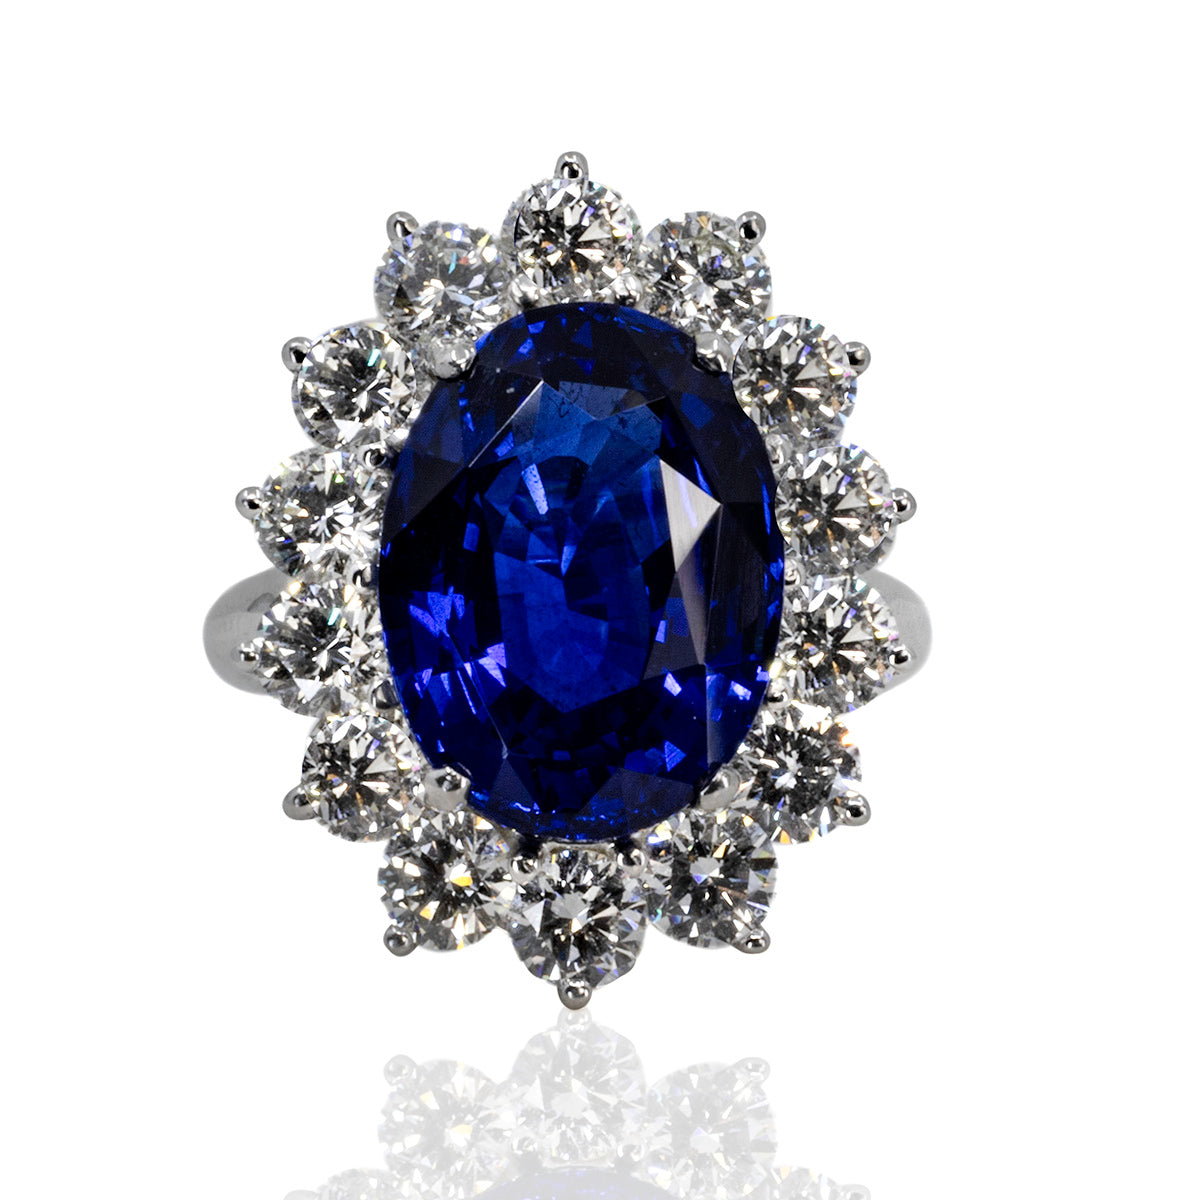 Top Gem 10.06 Carat Sapphire Ring